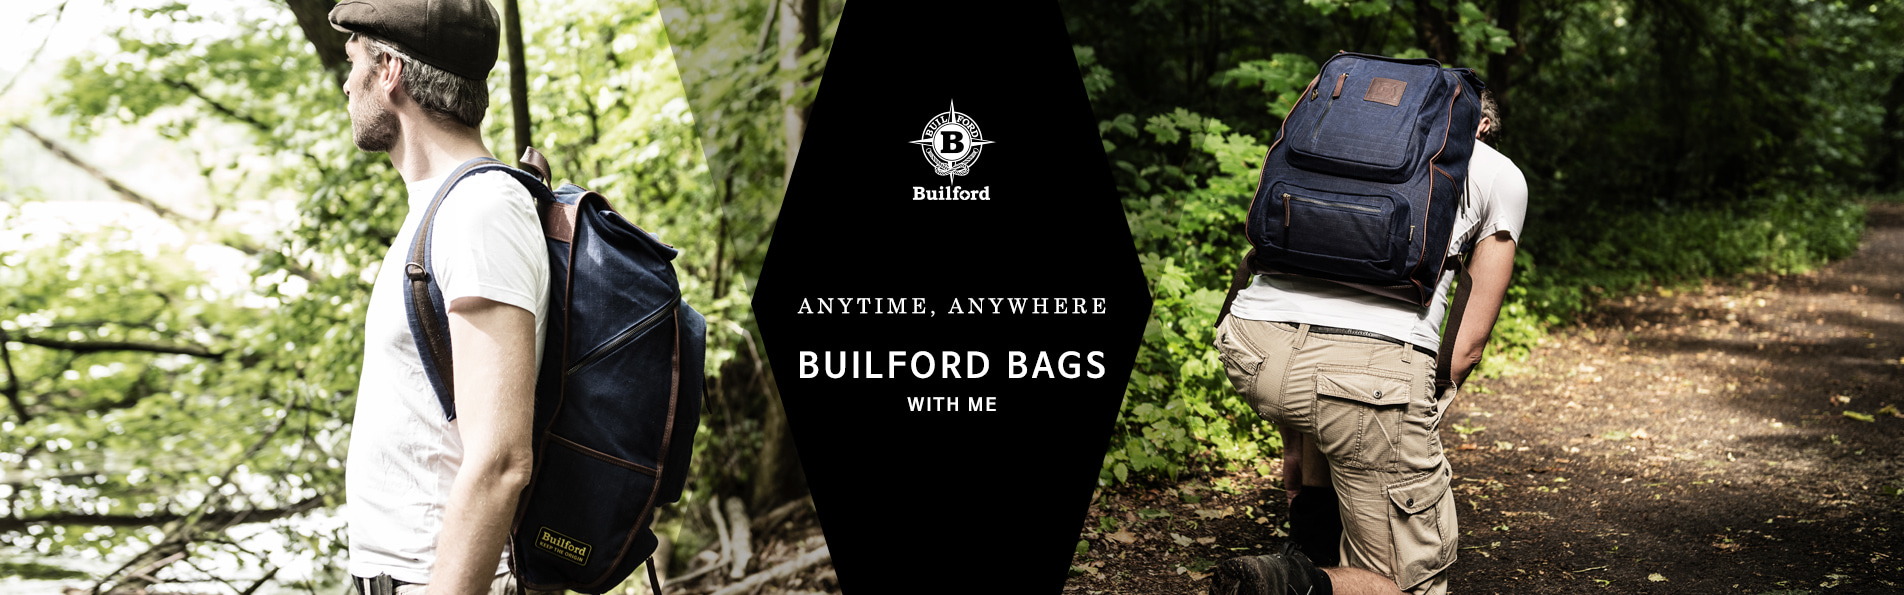 builford bags